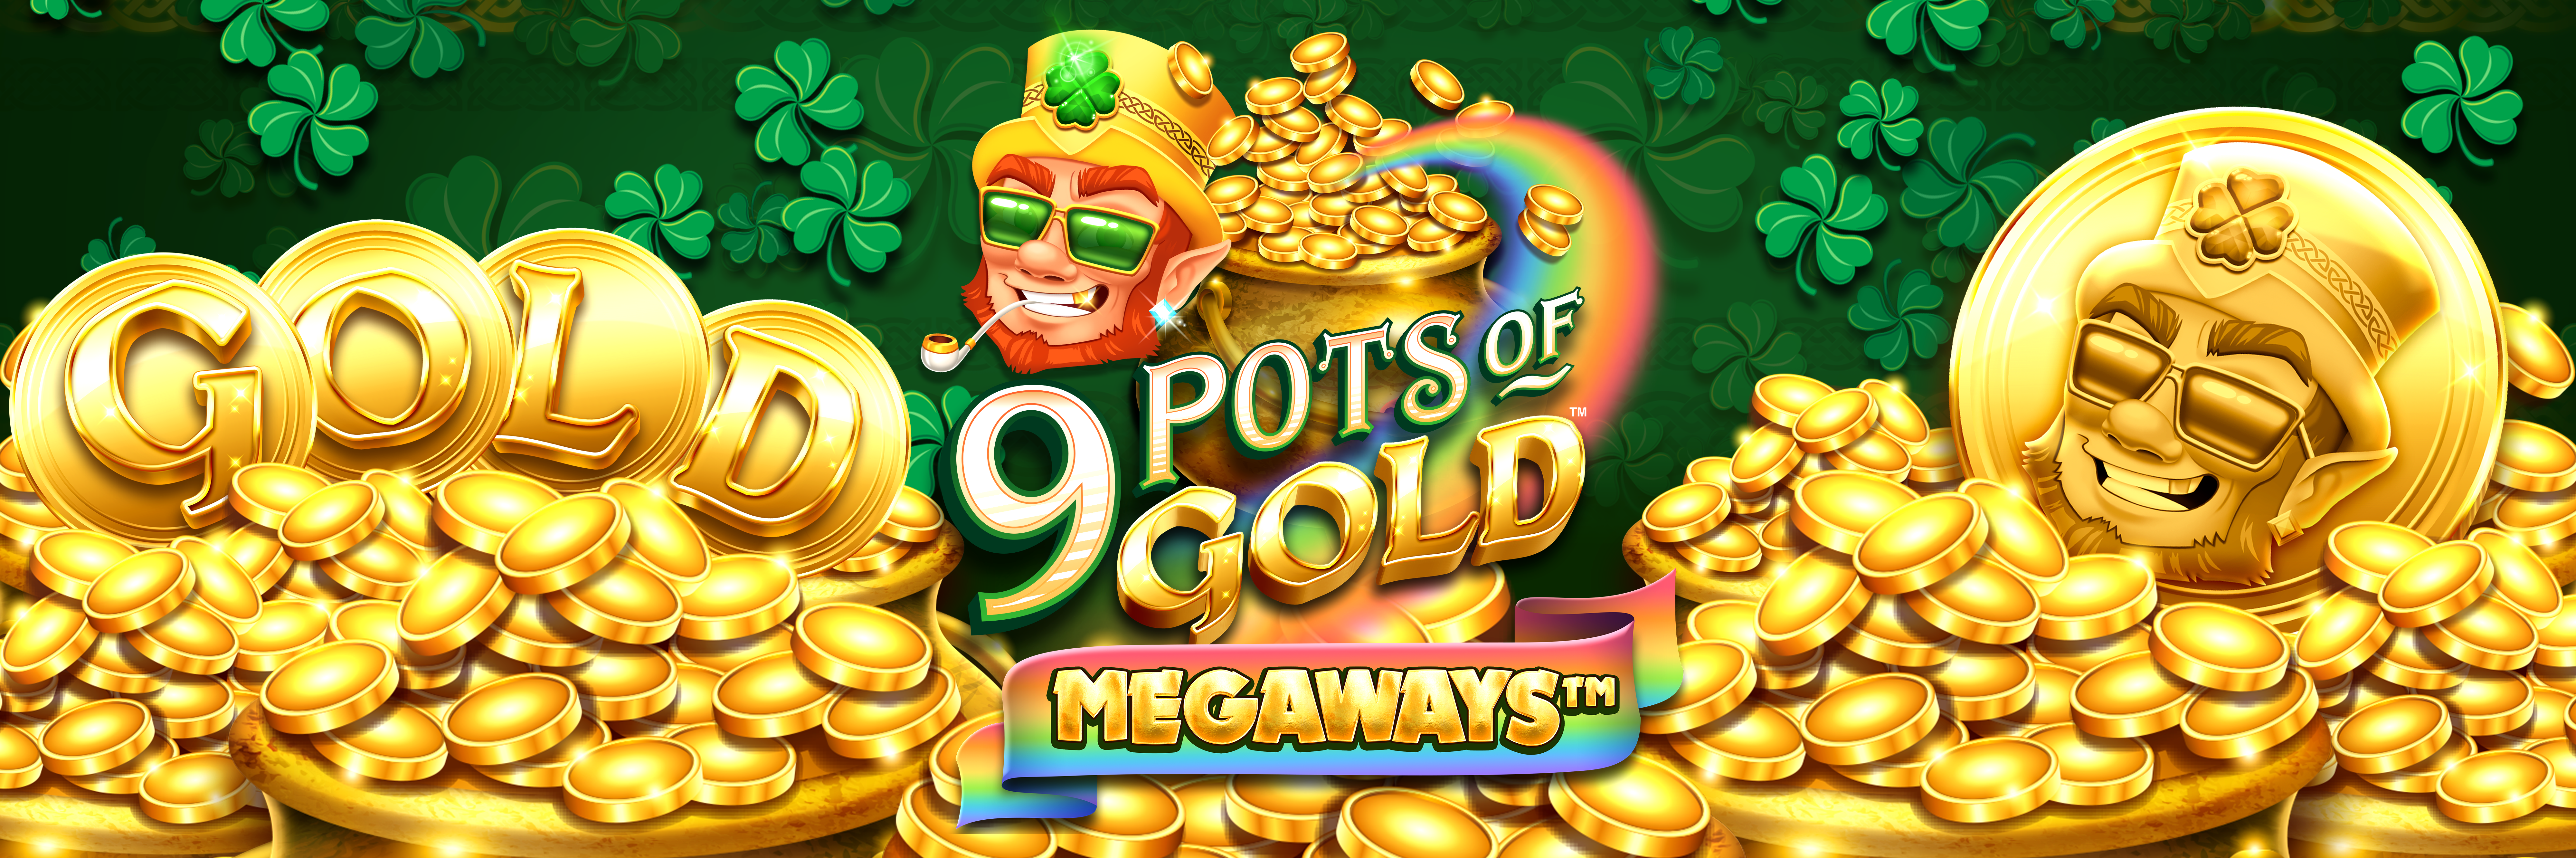 9 pots of gold megaways slot logo